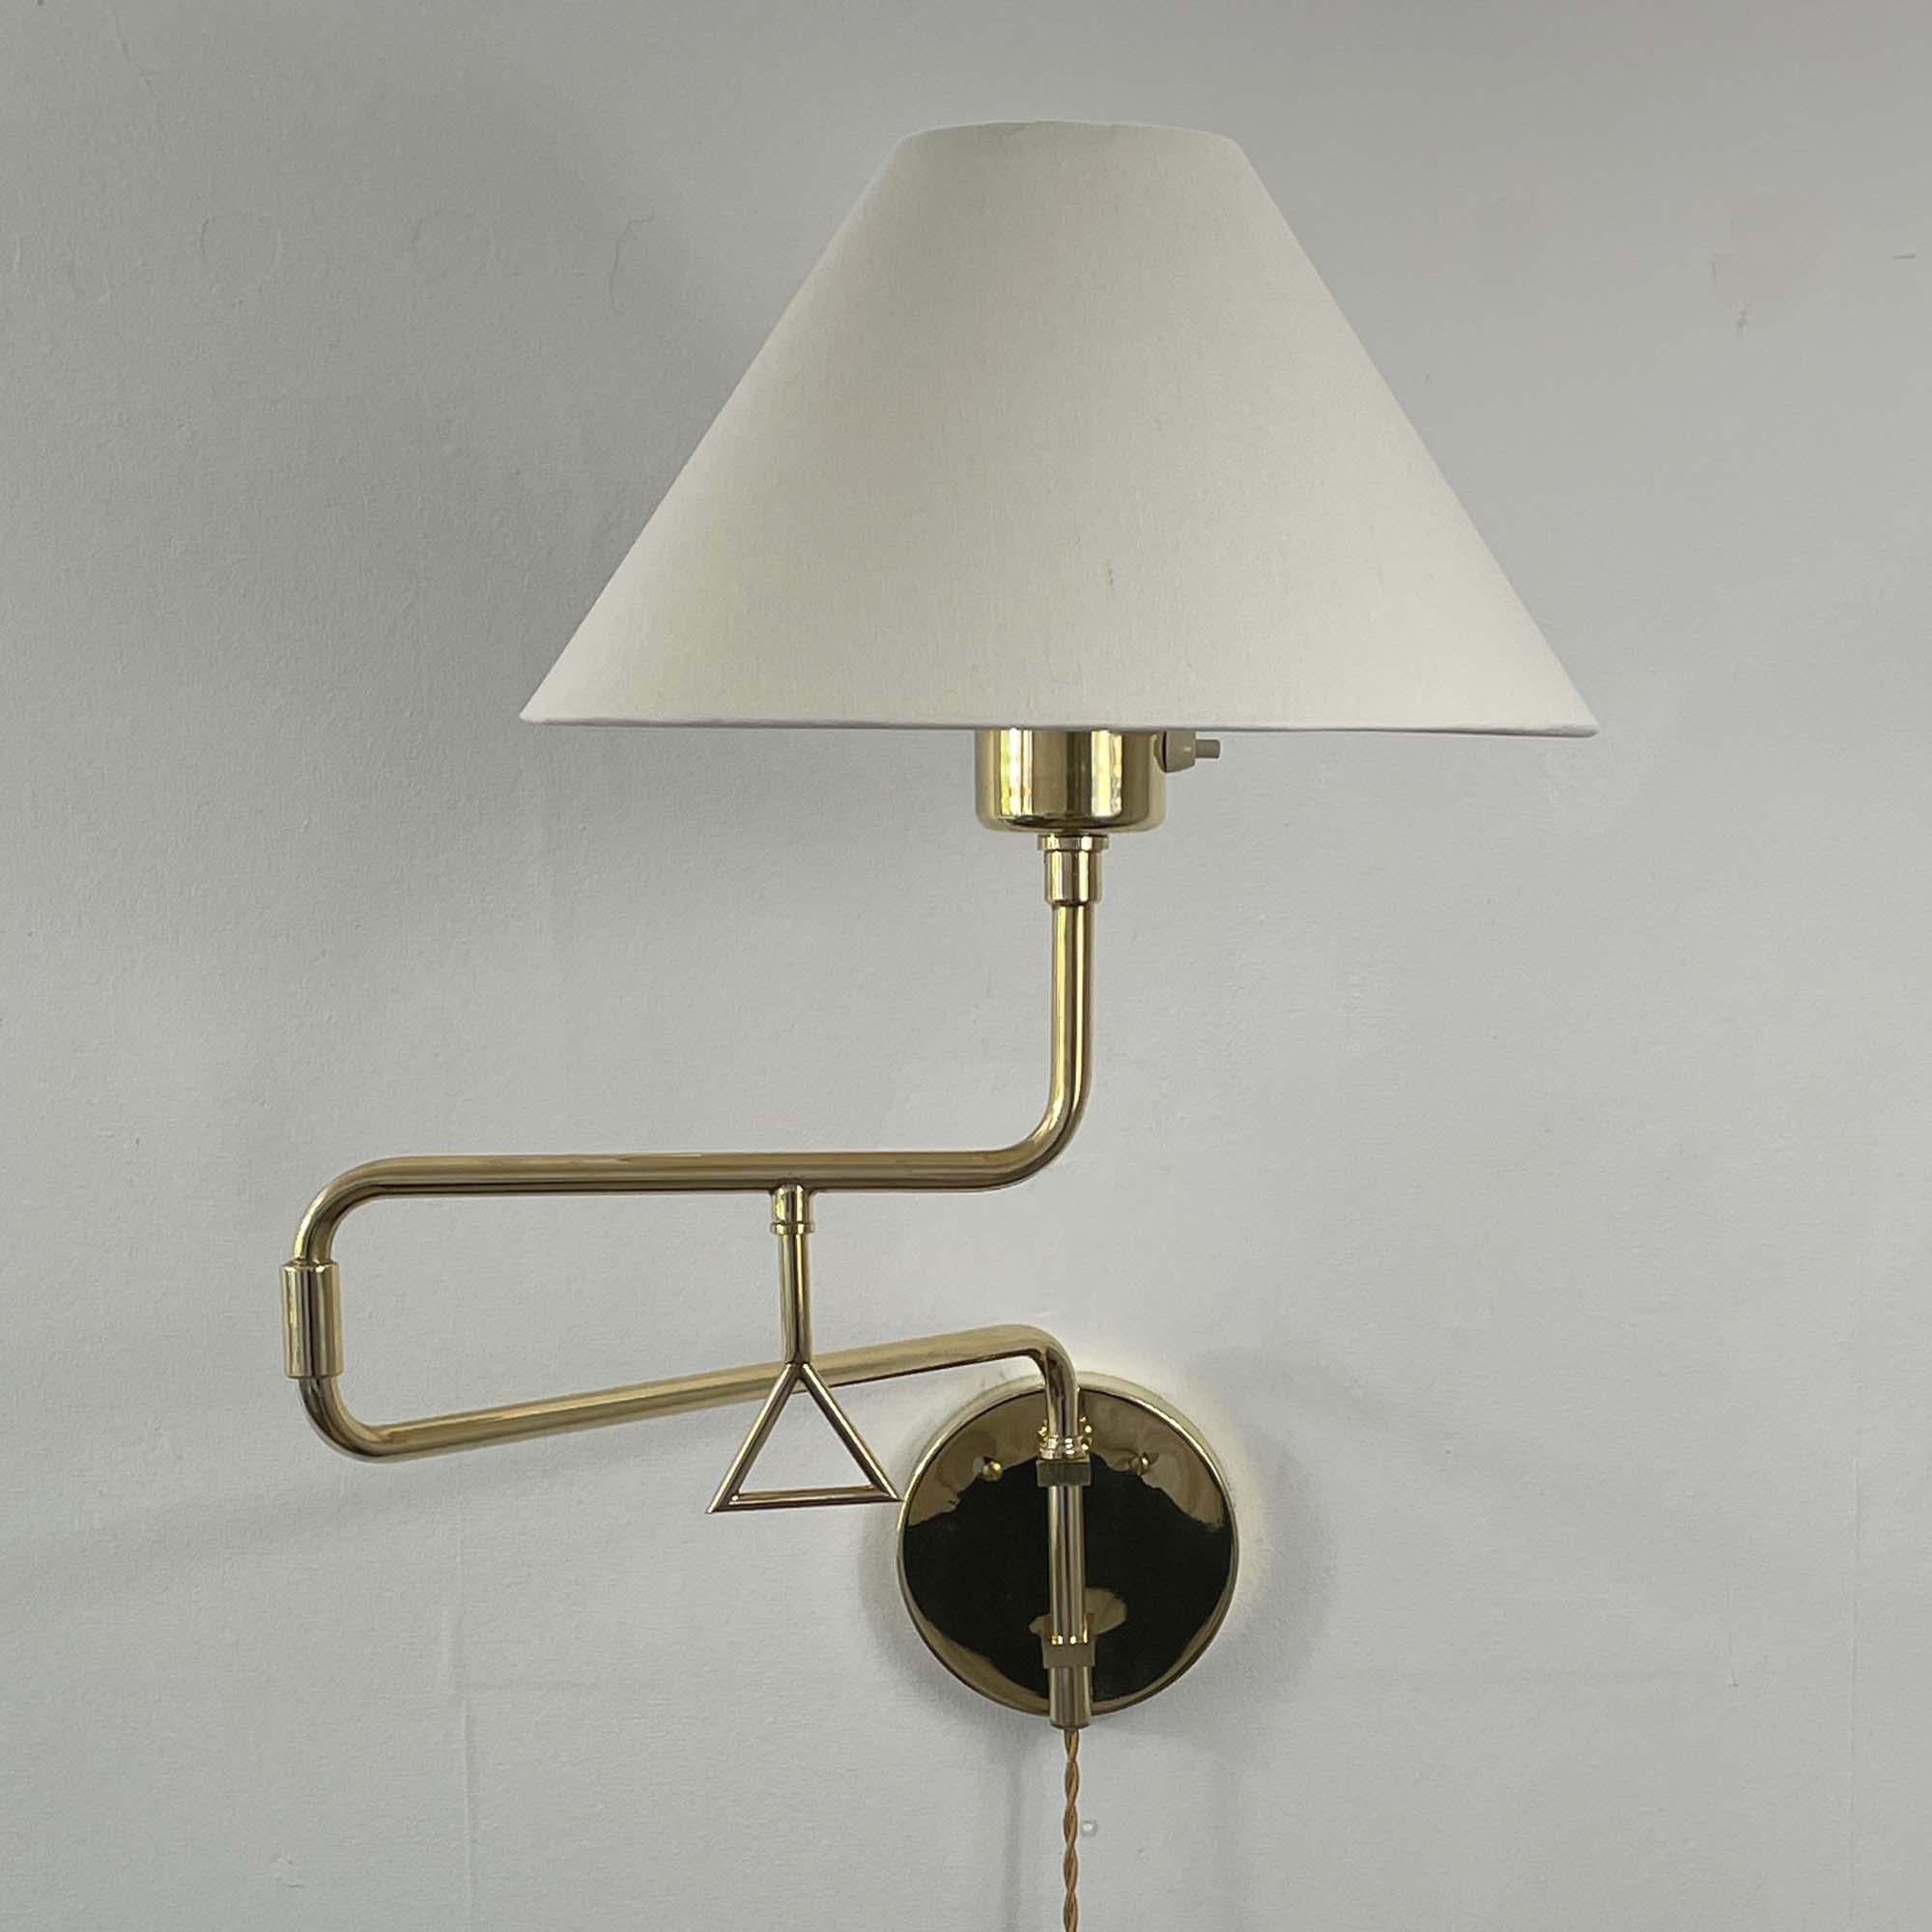 Mid-20th Century Articulating Brass Wall Light, Armatur Hantverk Tibro, Sweden 1950s For Sale